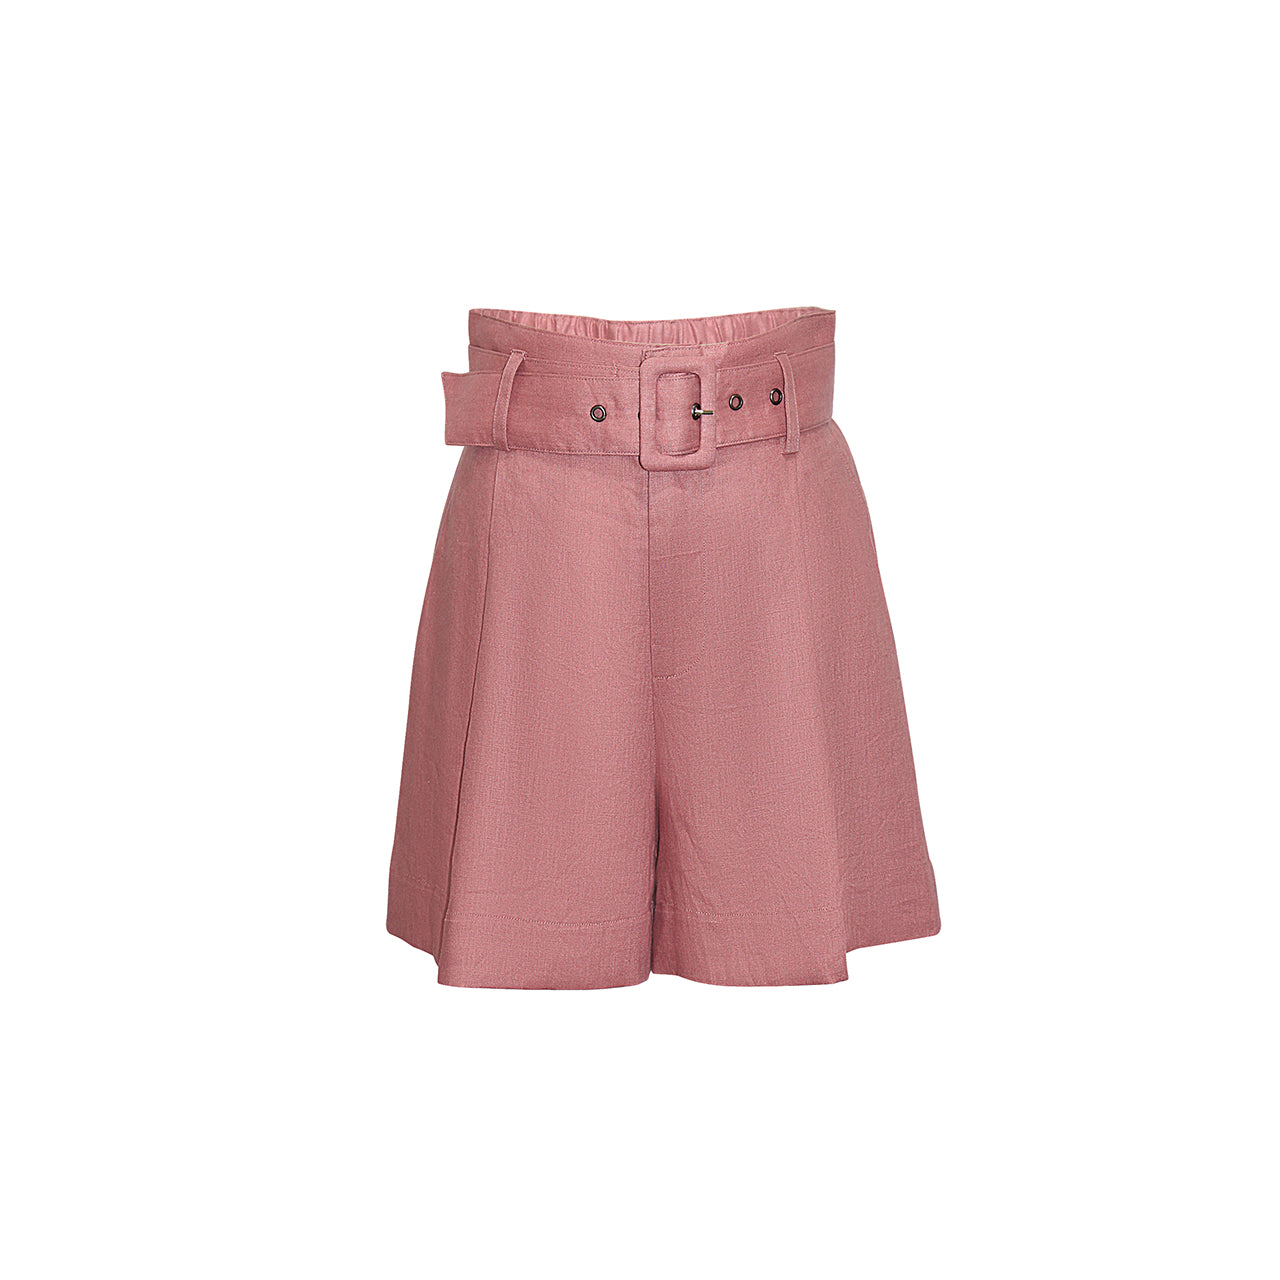 Get Your Hands on Dusty Pink NOVA Linen Shorts